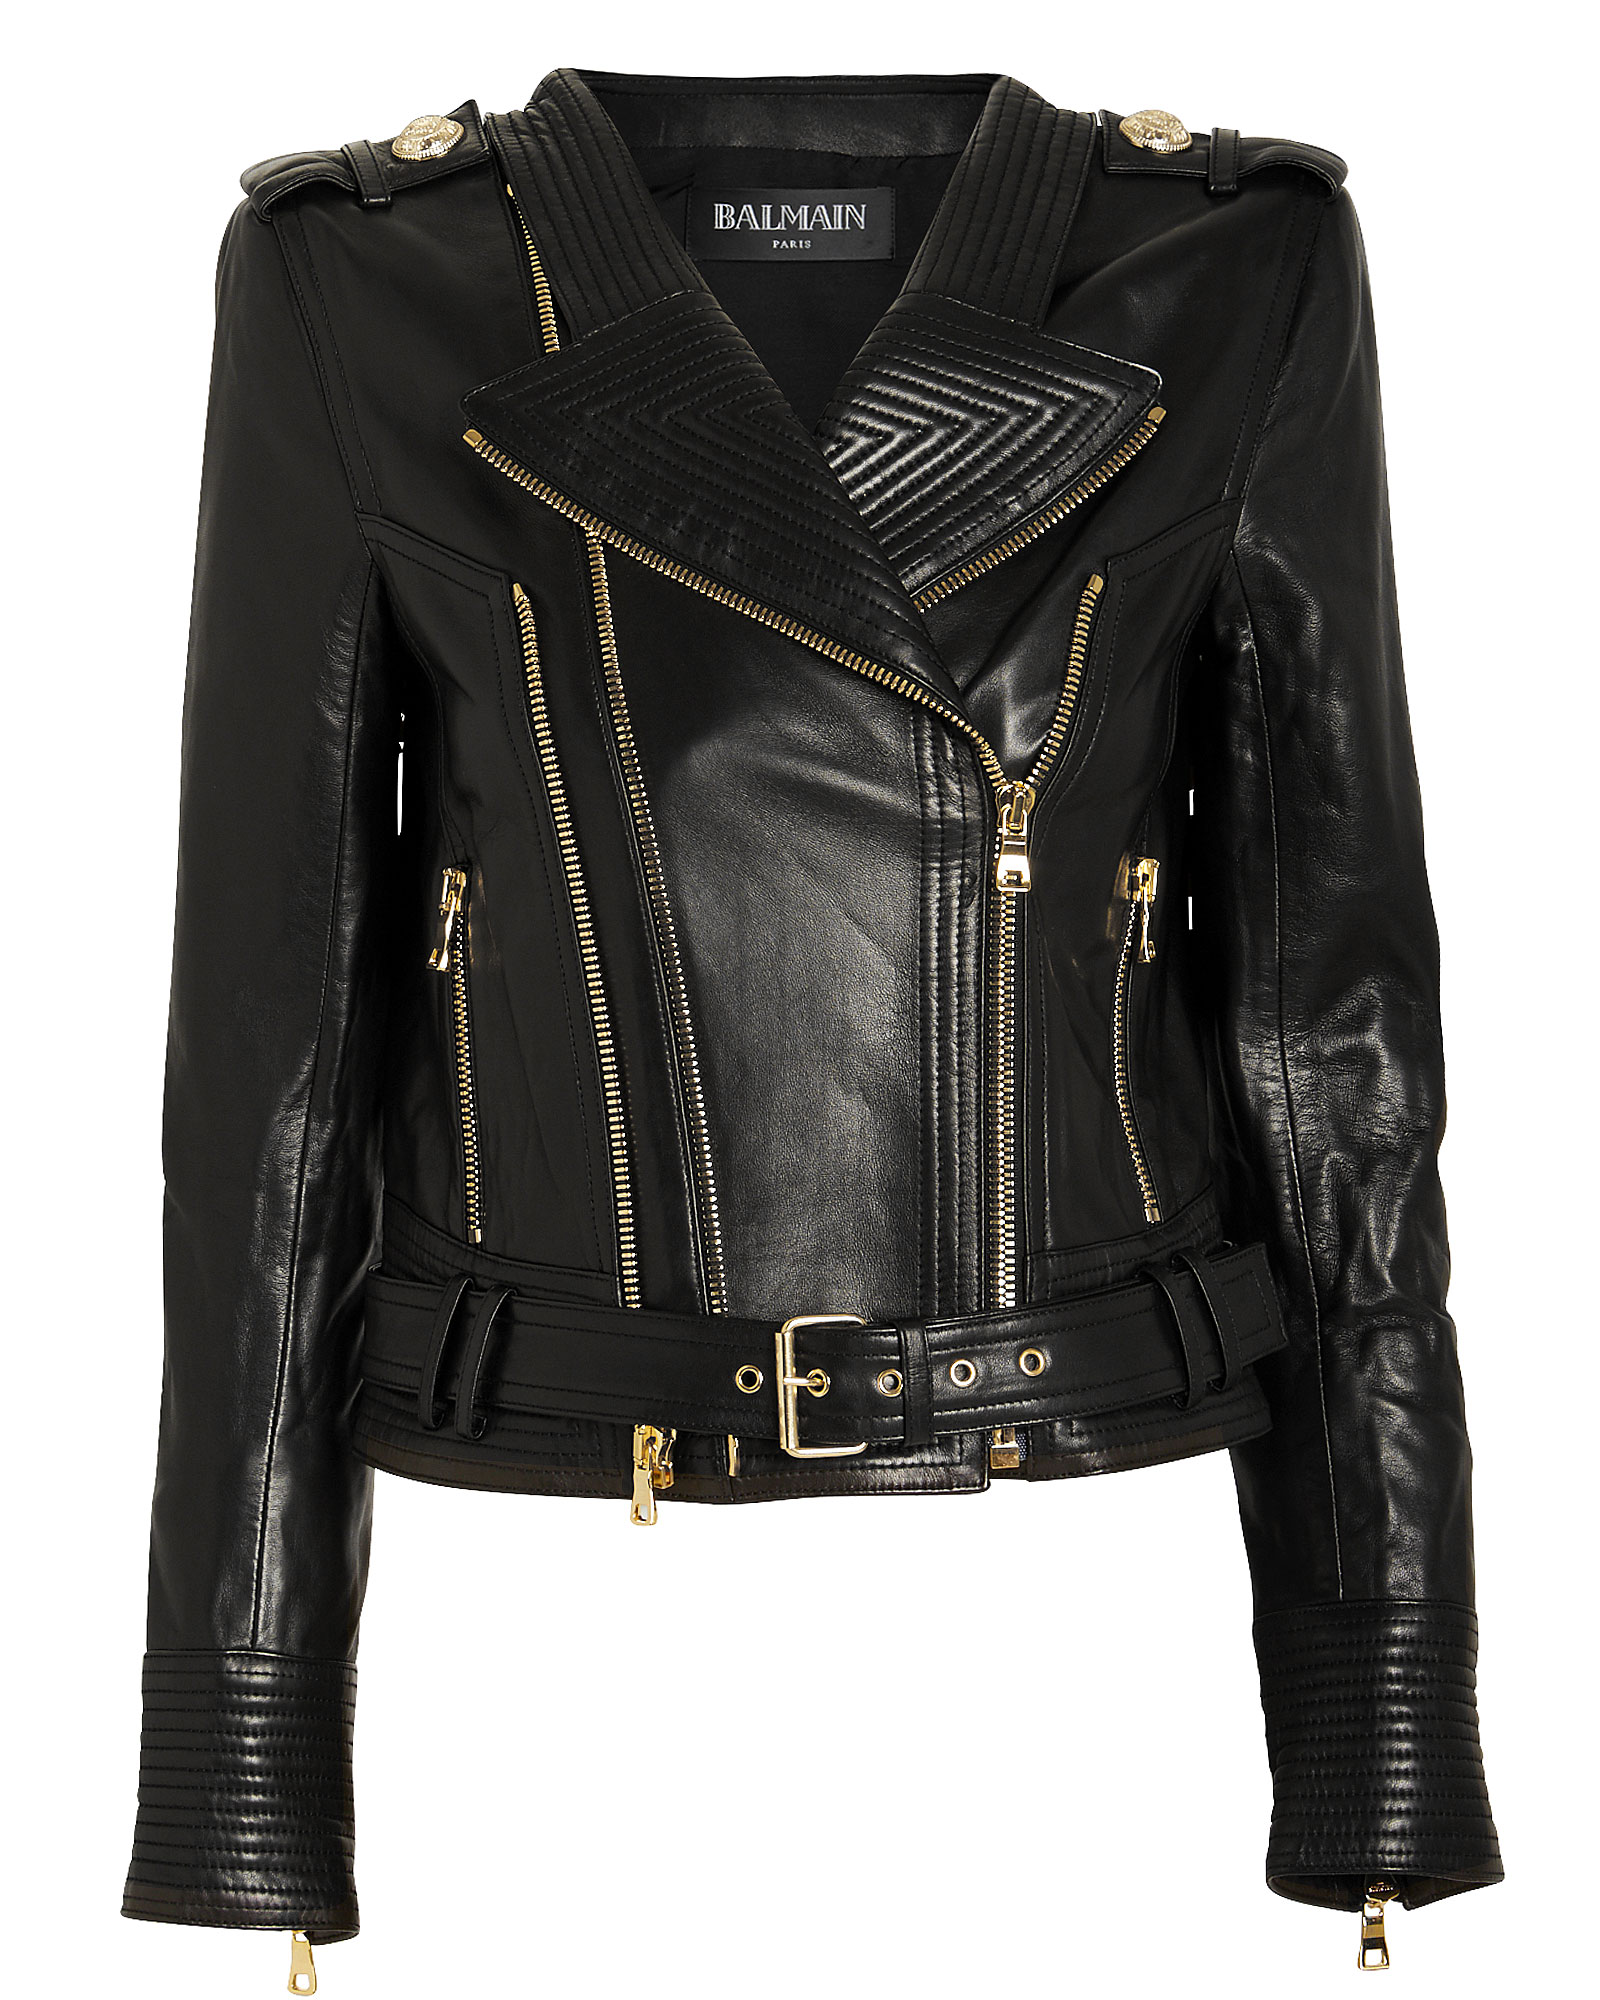 Balmain Cropped Leather Moto Jacket in black | INTERMIX®